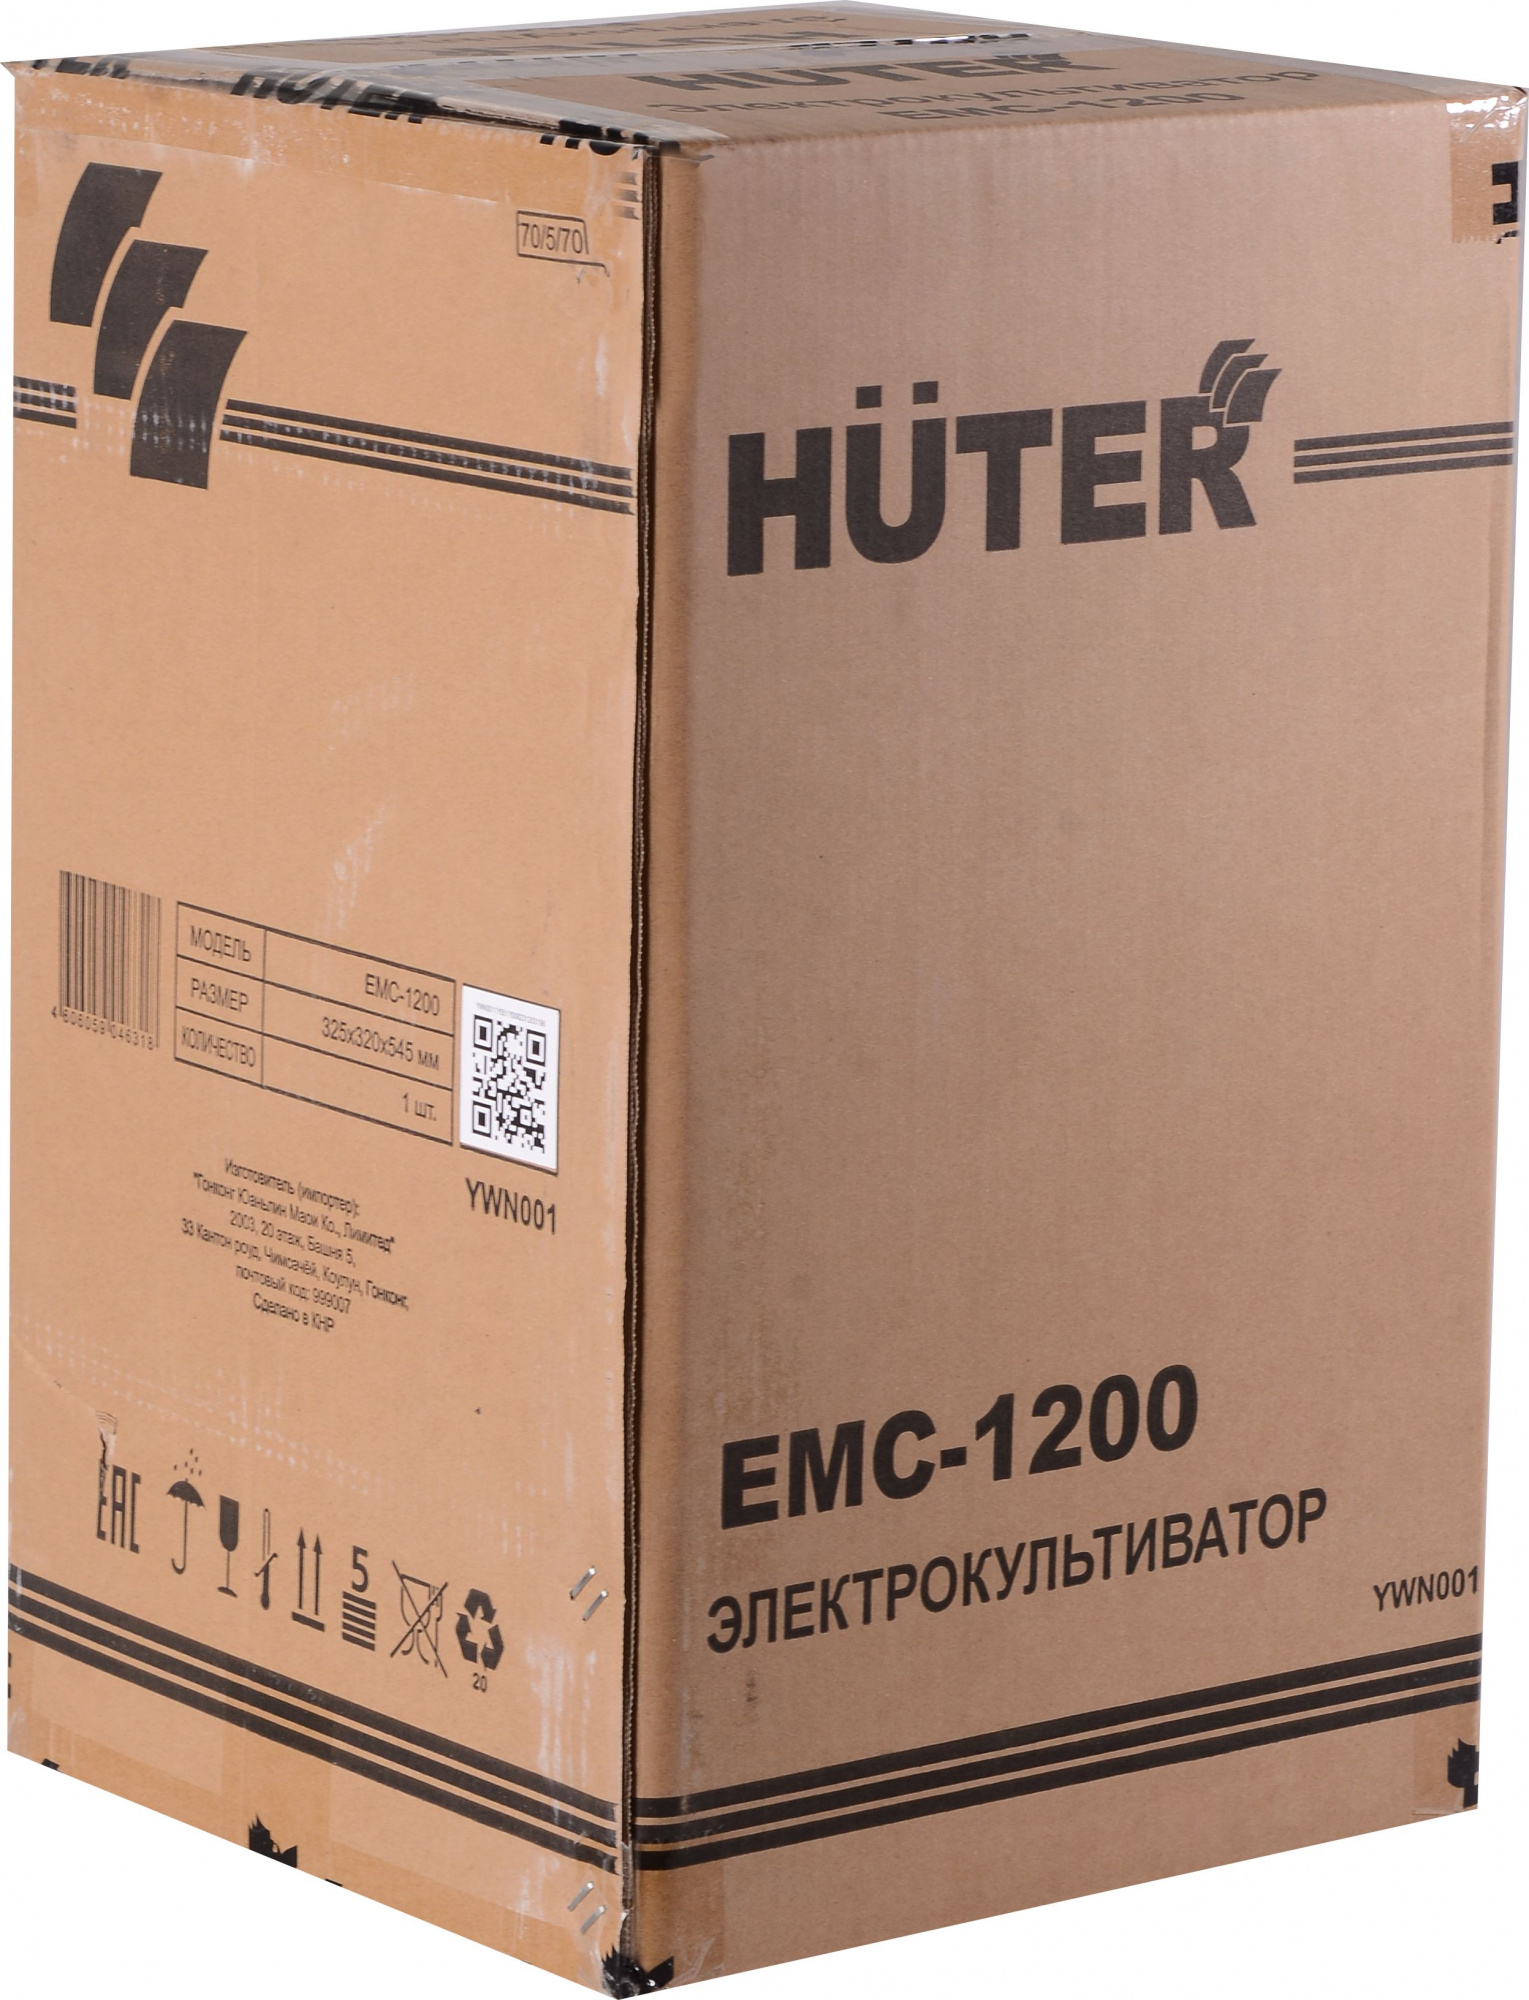 Культиватор Huter ЕМС-1200